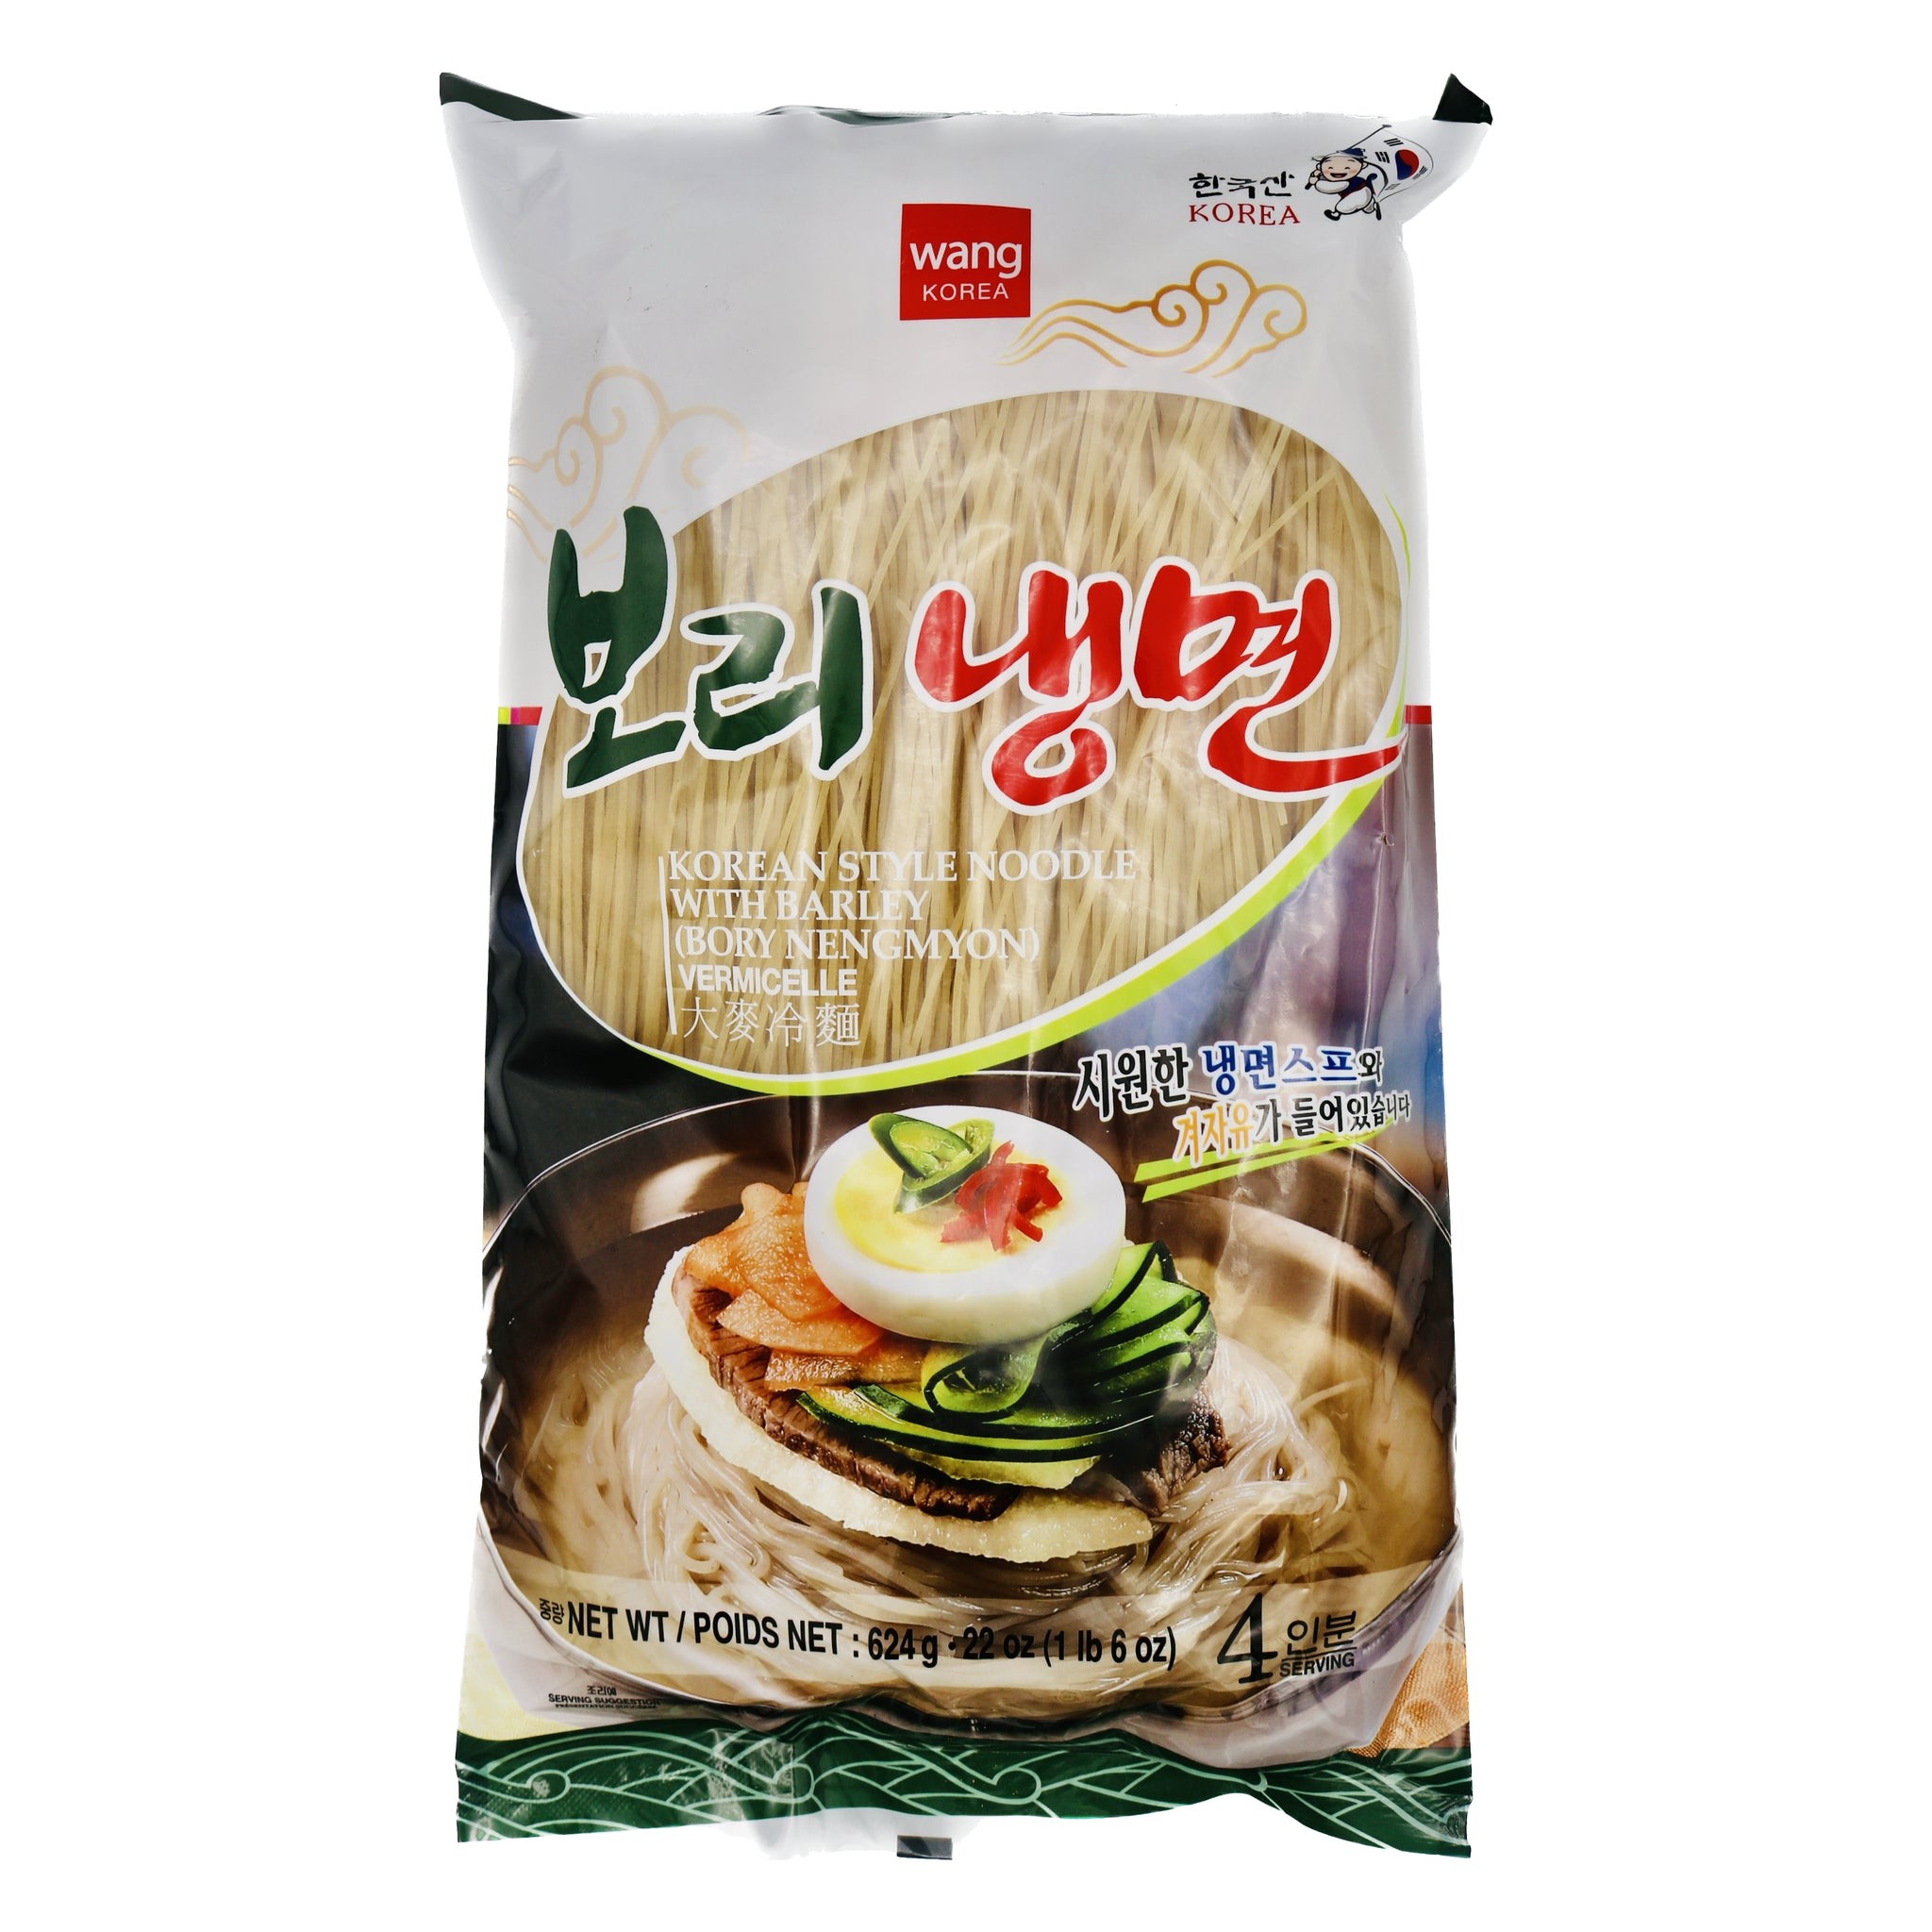 Wang Korean Style Noodle With Barley | Superwafer - Online Supermarket